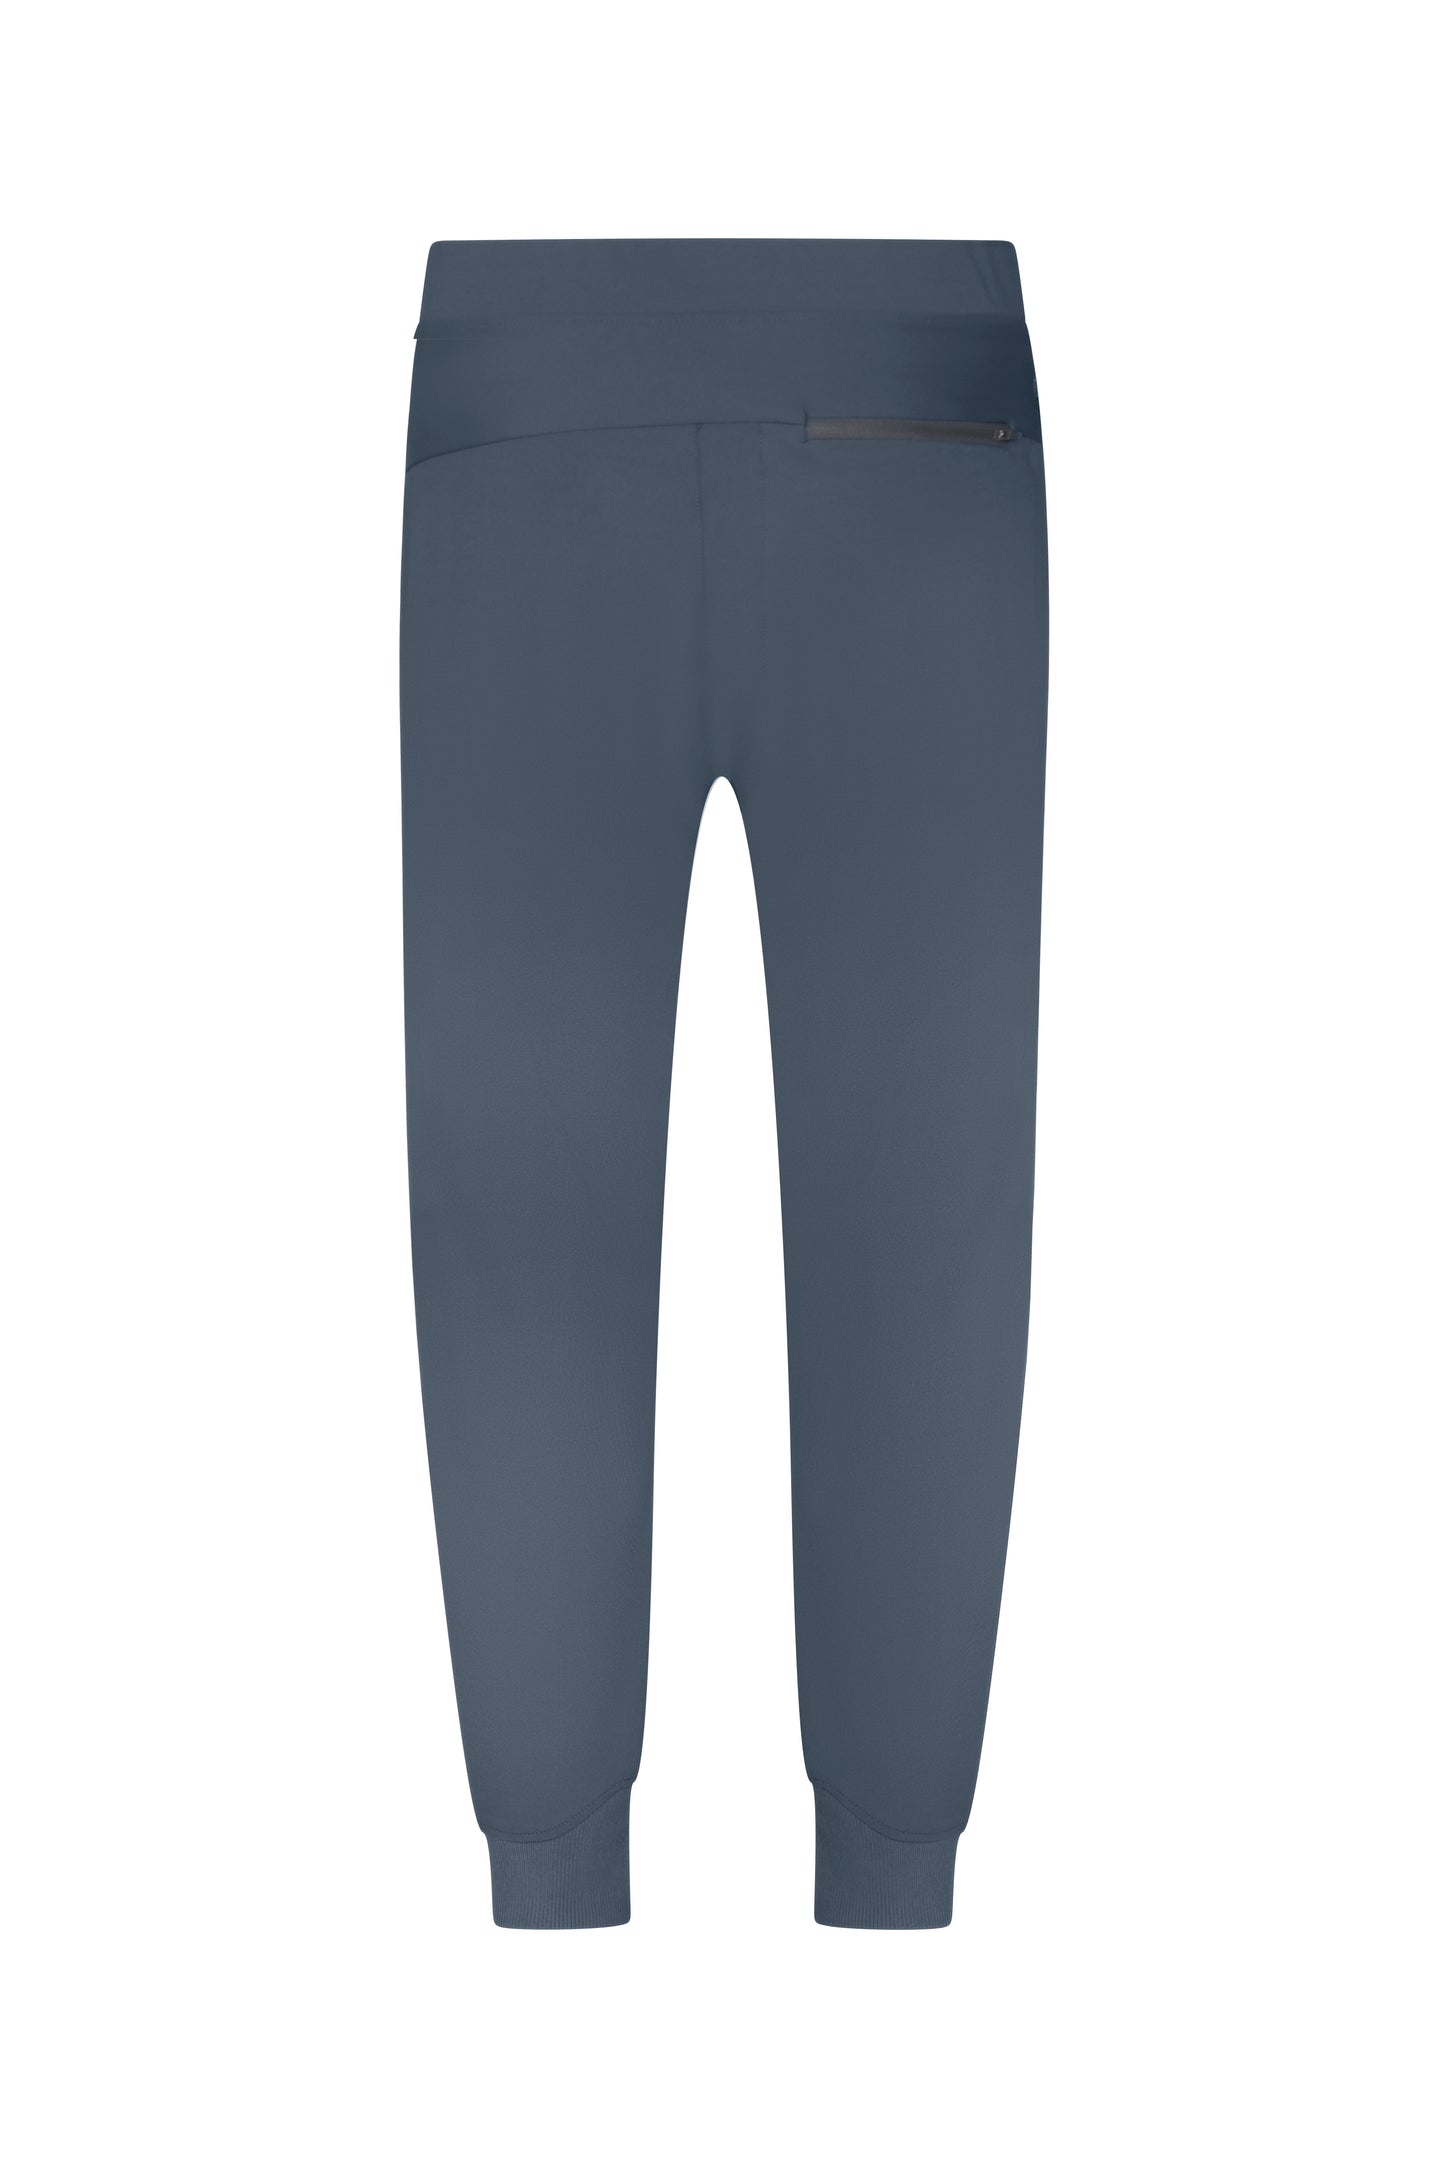 Applique Logo Hoodie Set (Pants) - Graphite Grey